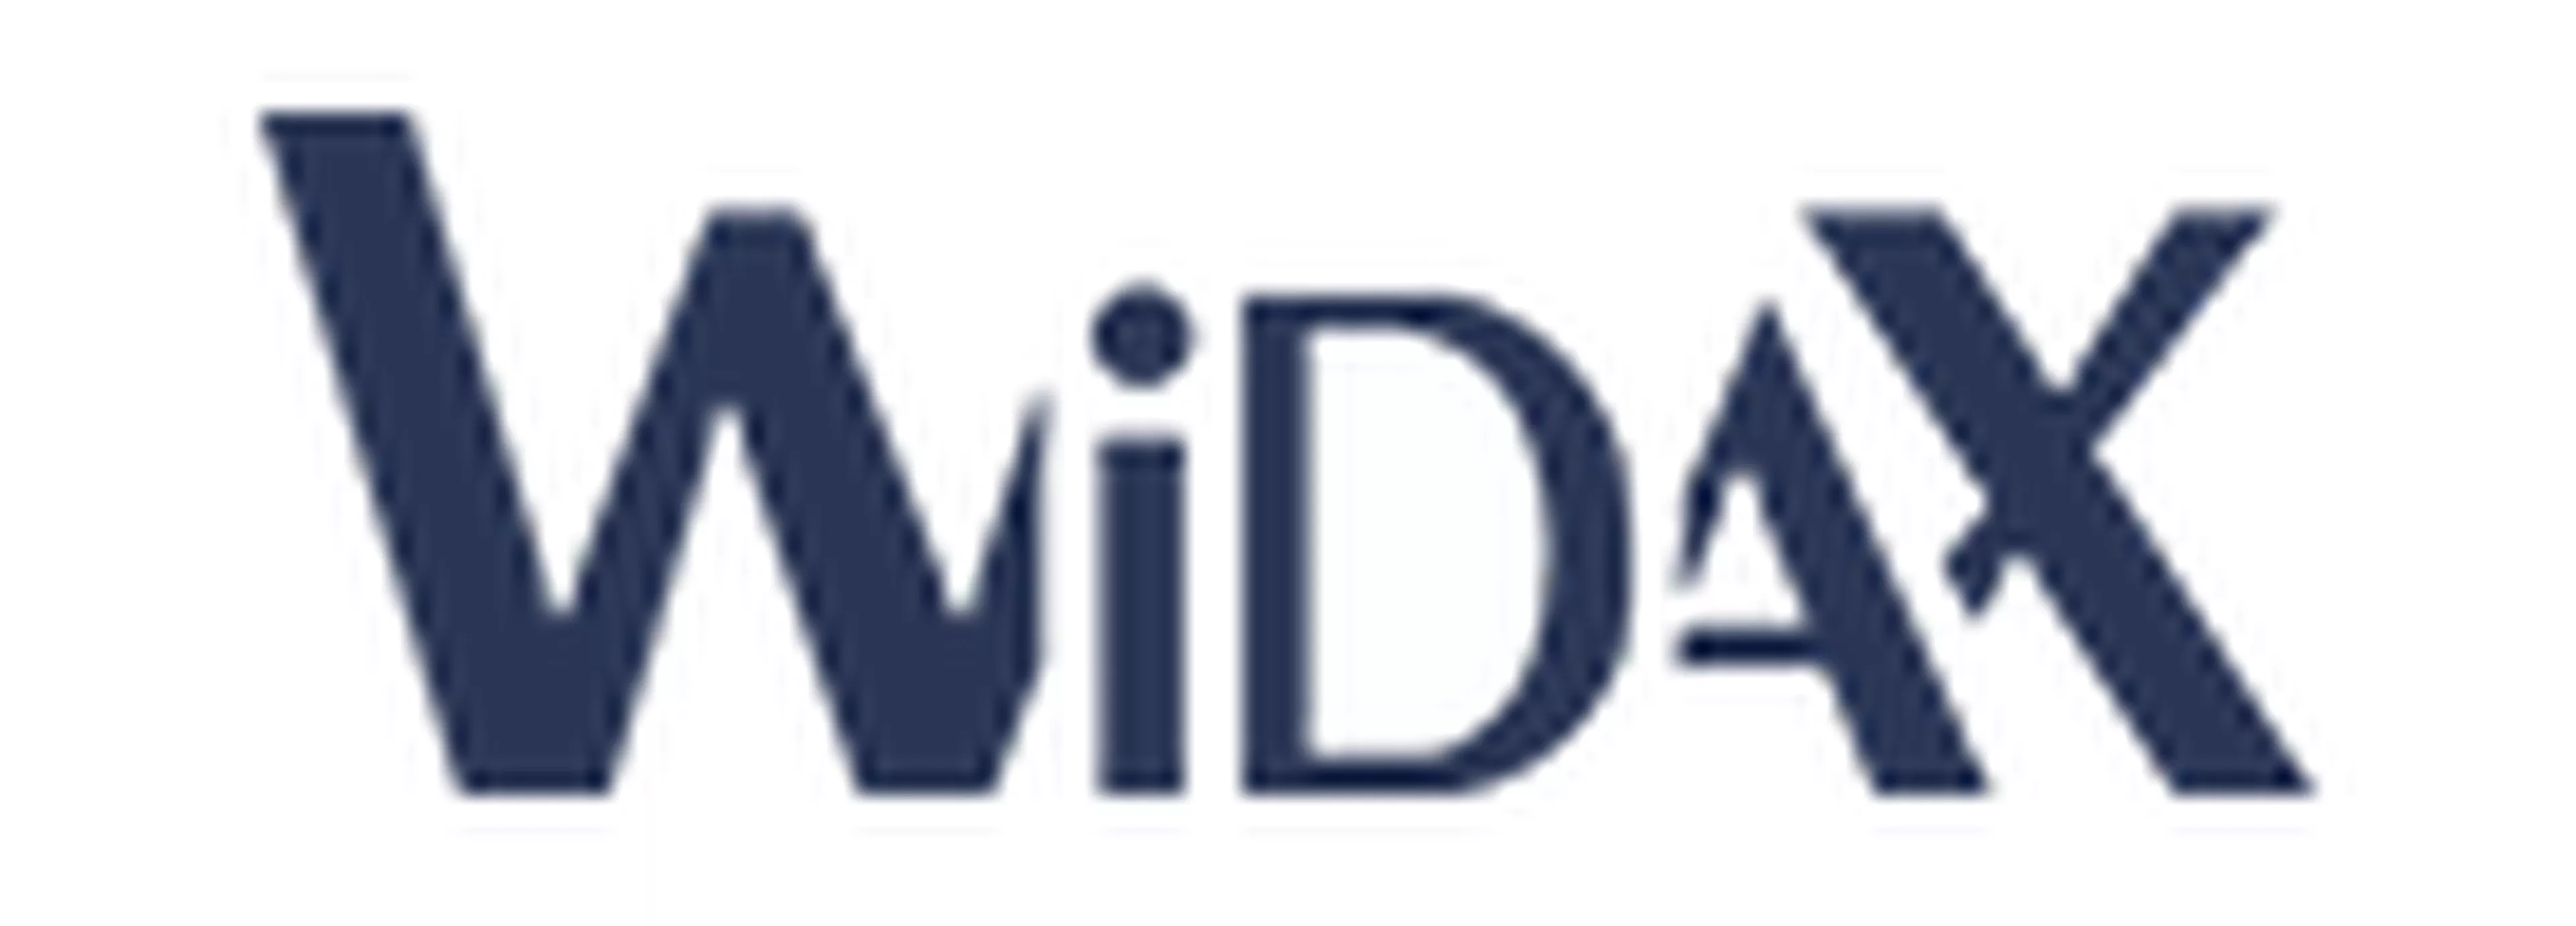 Widax logo